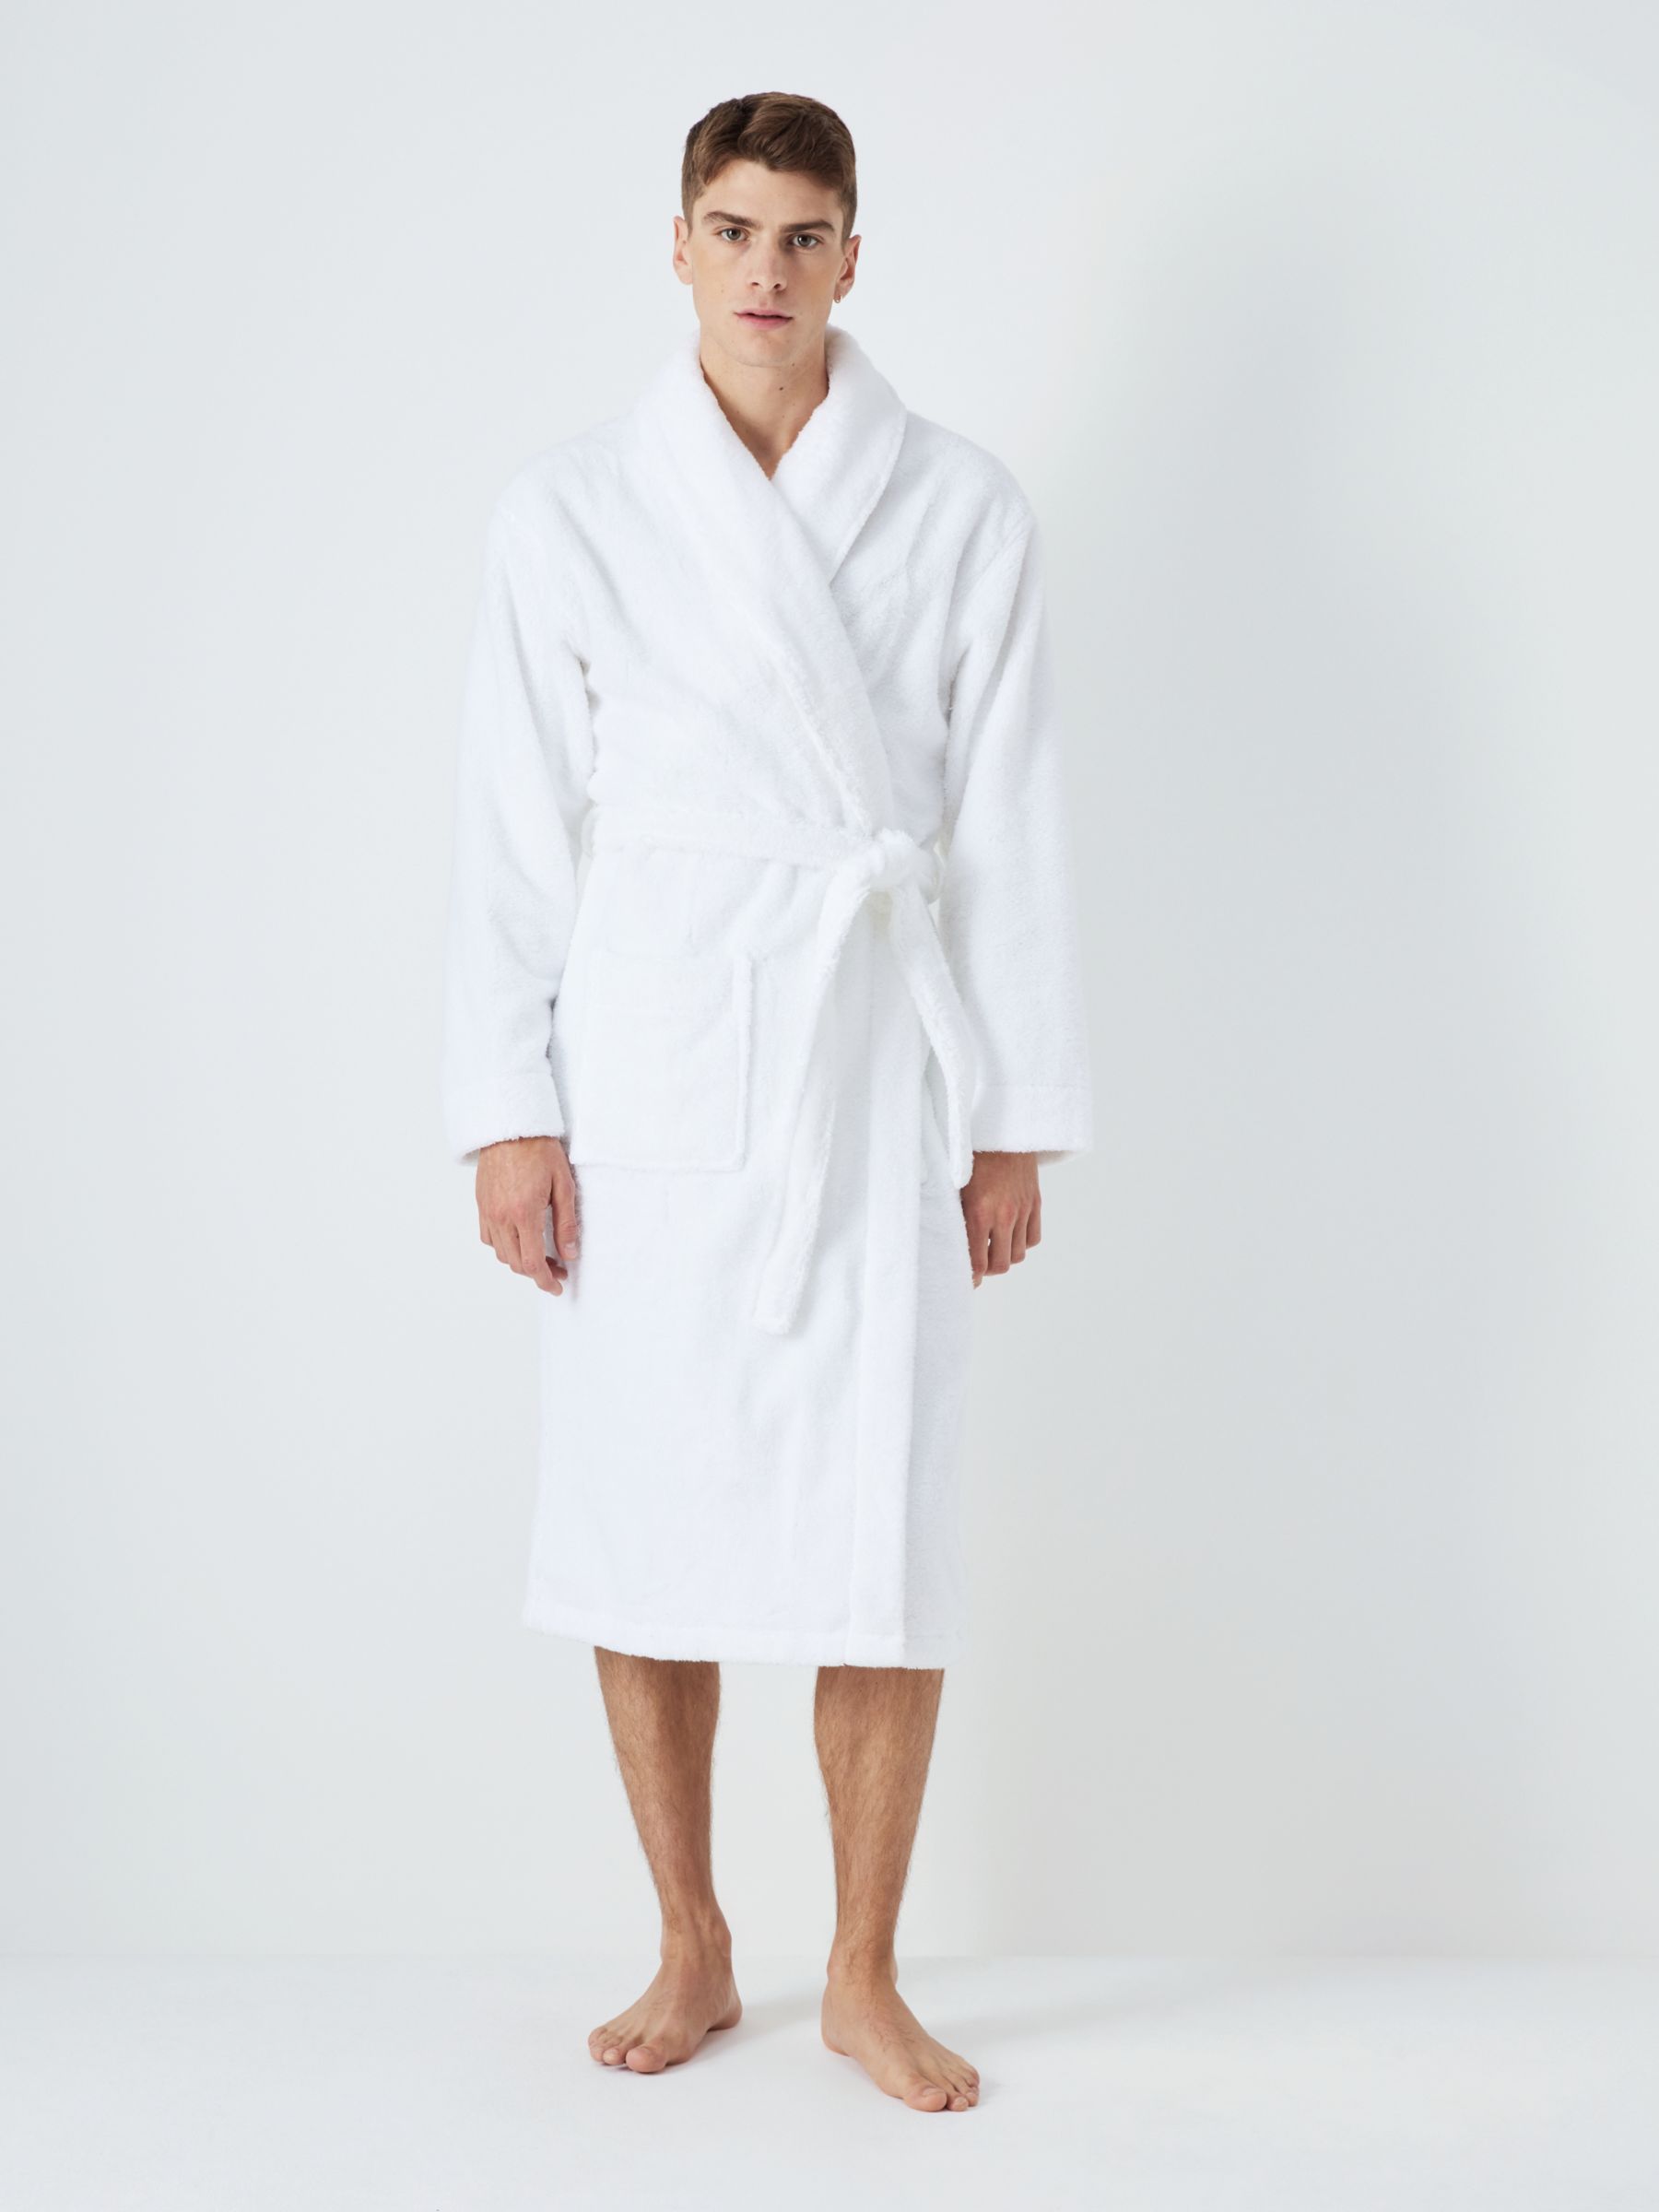 John Lewis Premium Luxury Towelling Robe, White, S